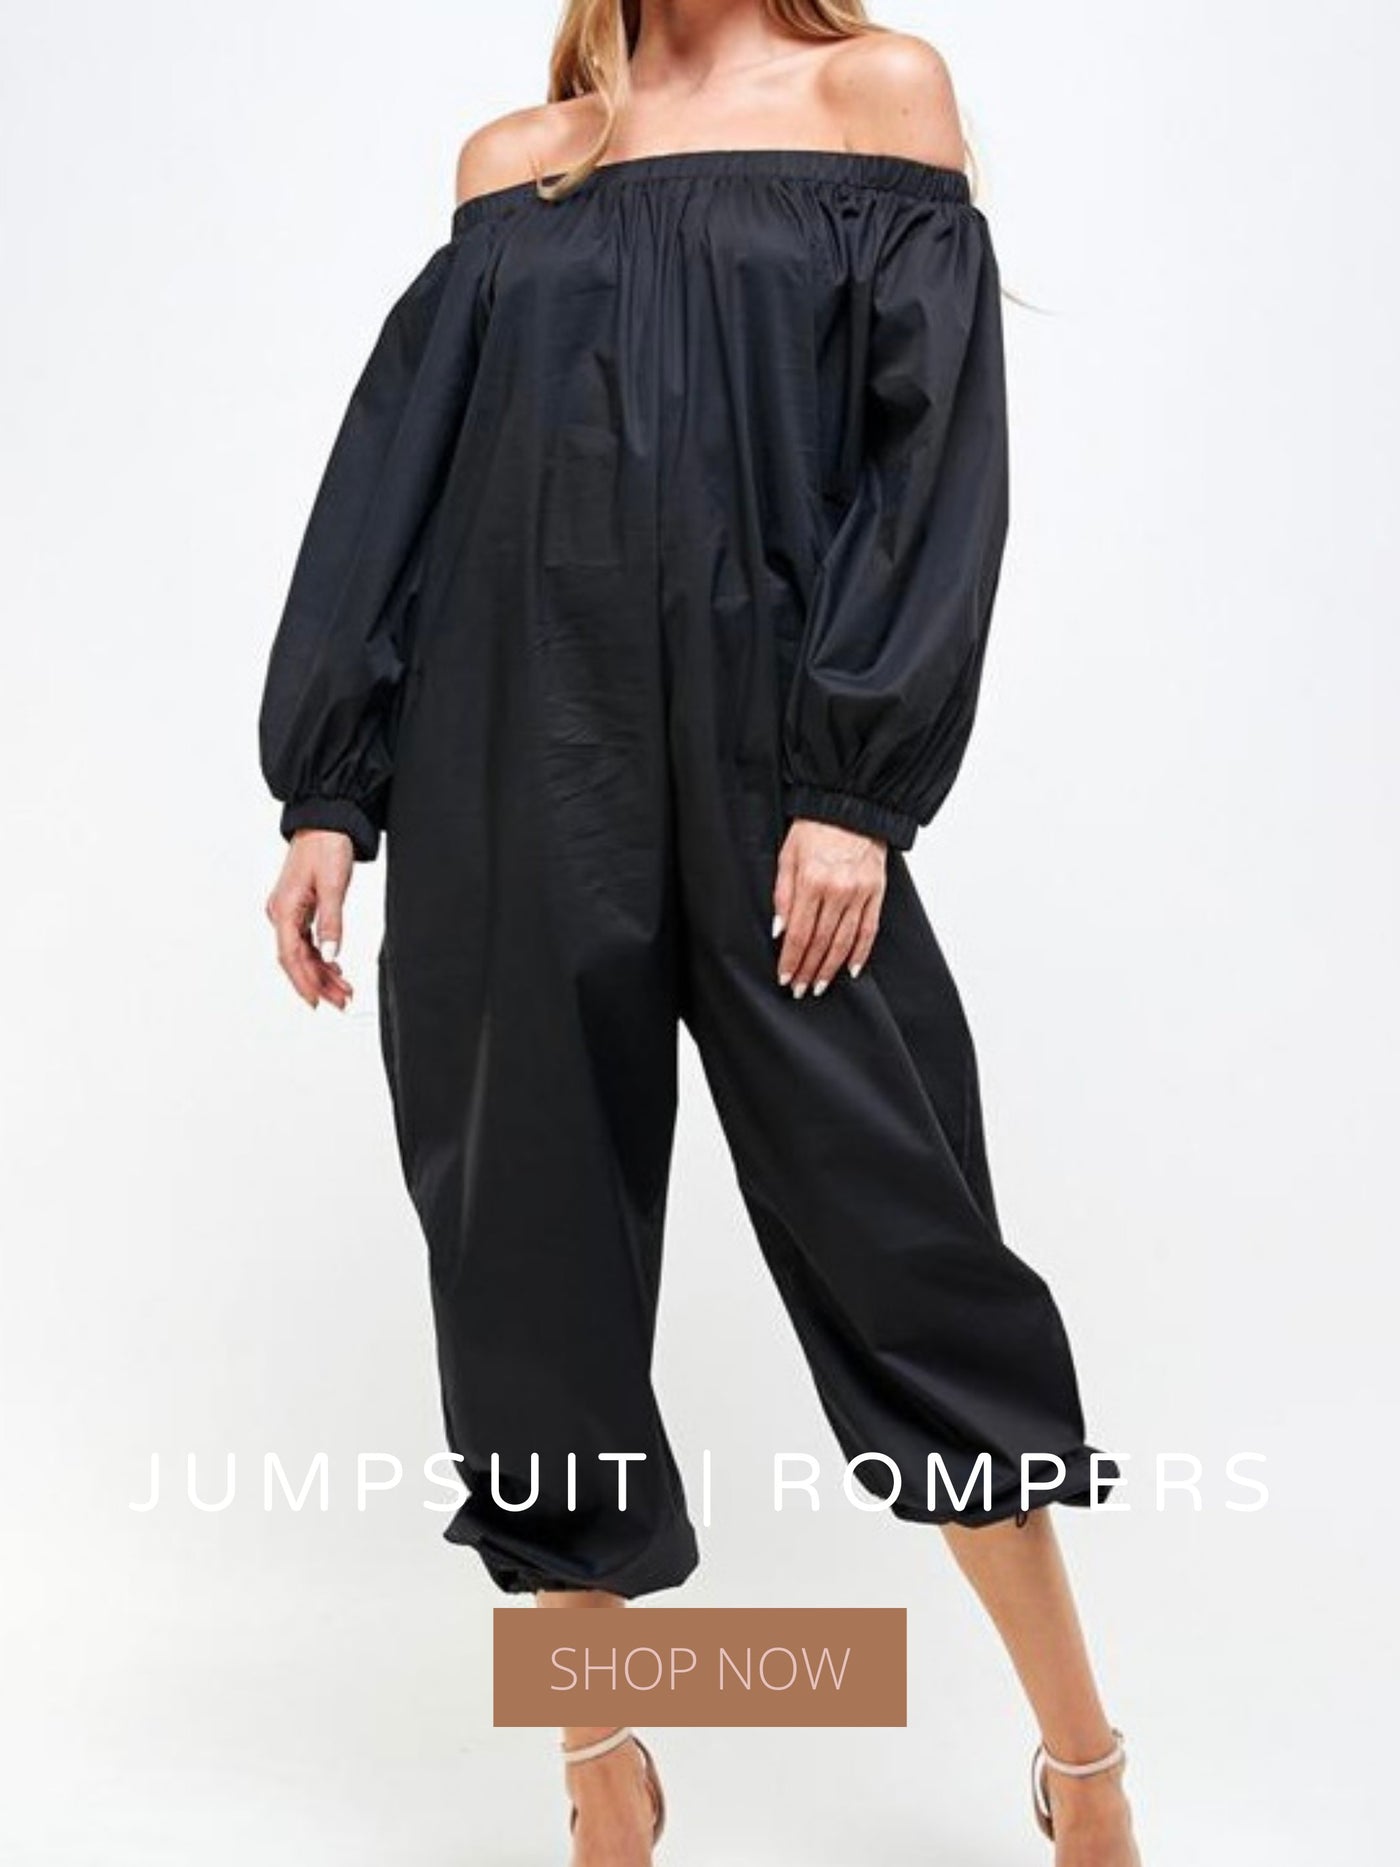 Jumpsuit & Rompers